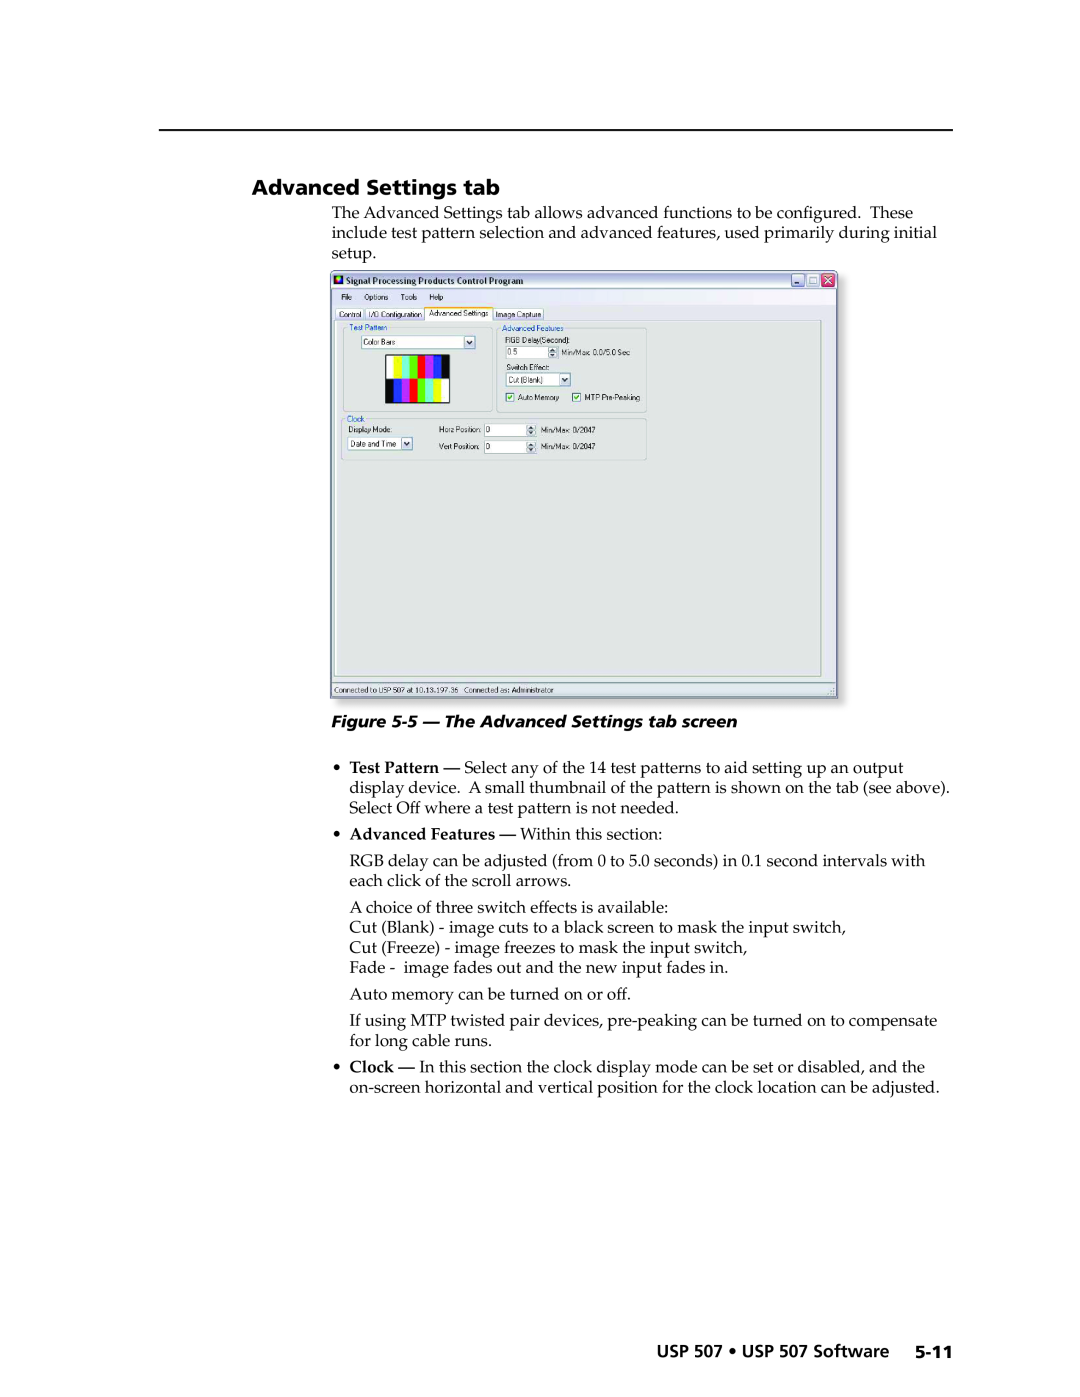 Extron electronic manual 5— The Advanced Settings tab screen, USP 507 • USP 507 Software 